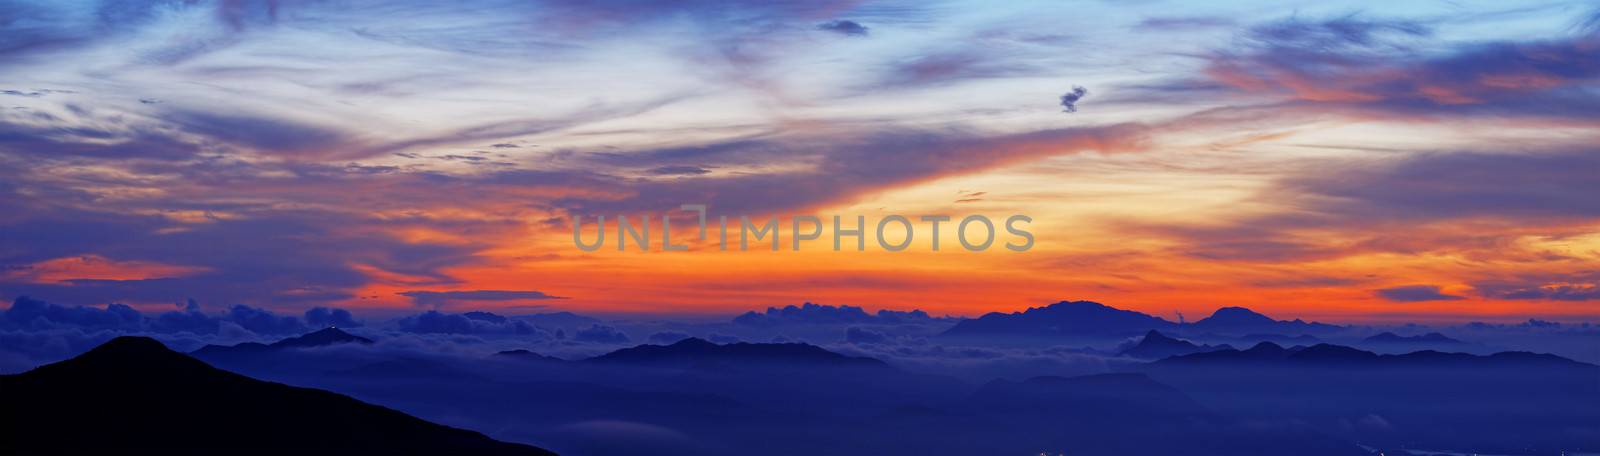 sunrise mountain by cozyta